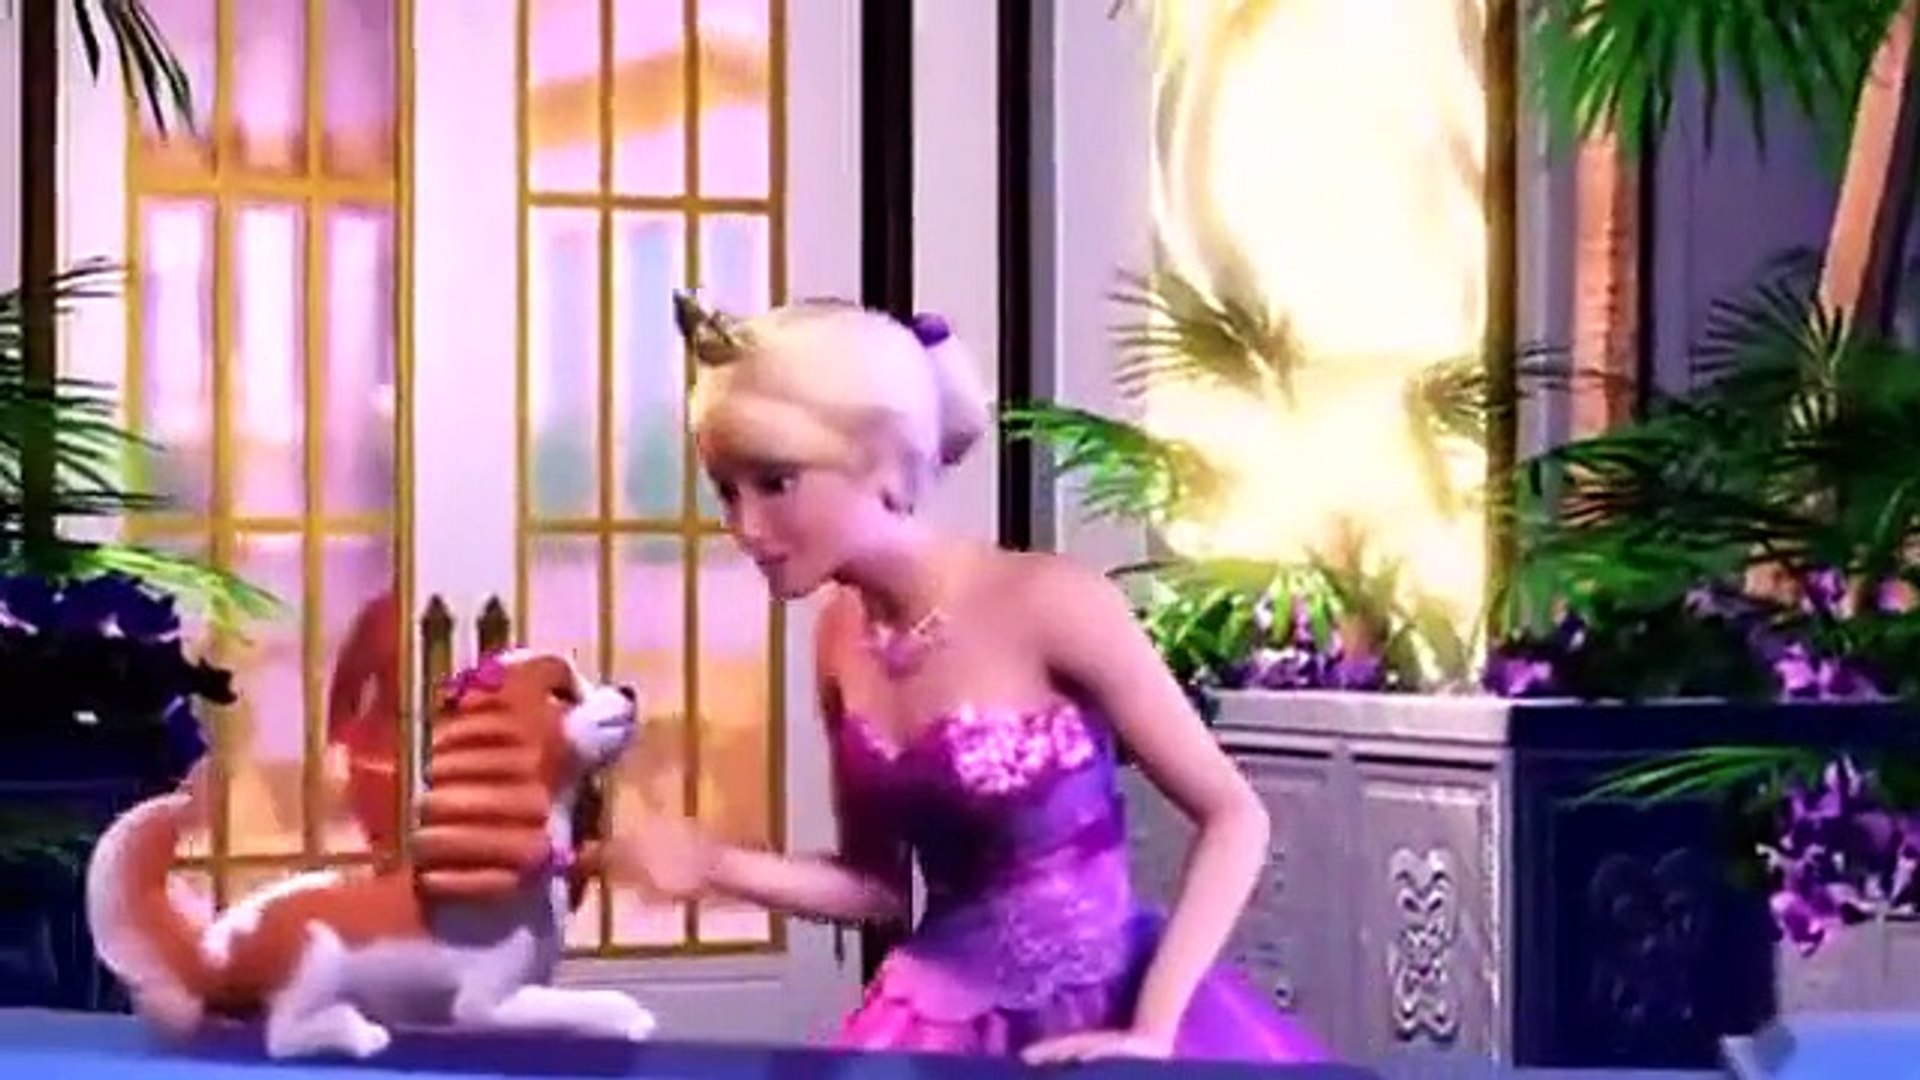 Barbie - A princesa ea pop star